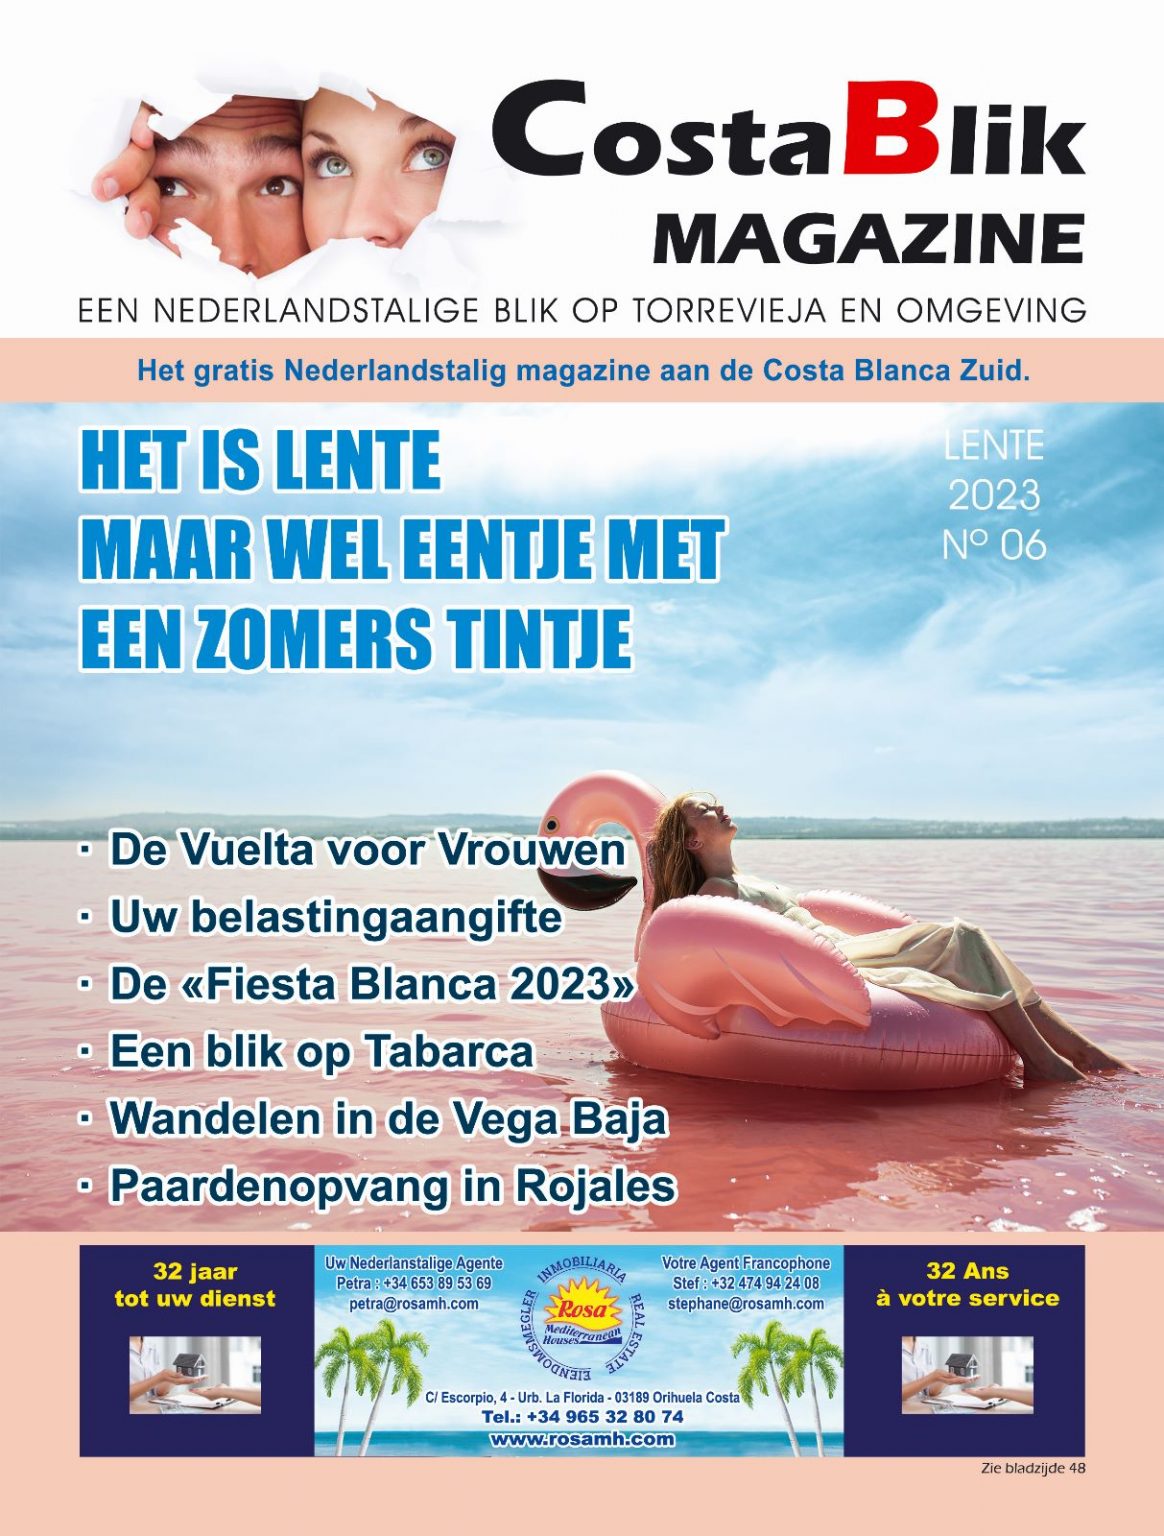 Costablik Magazine Lente 2023